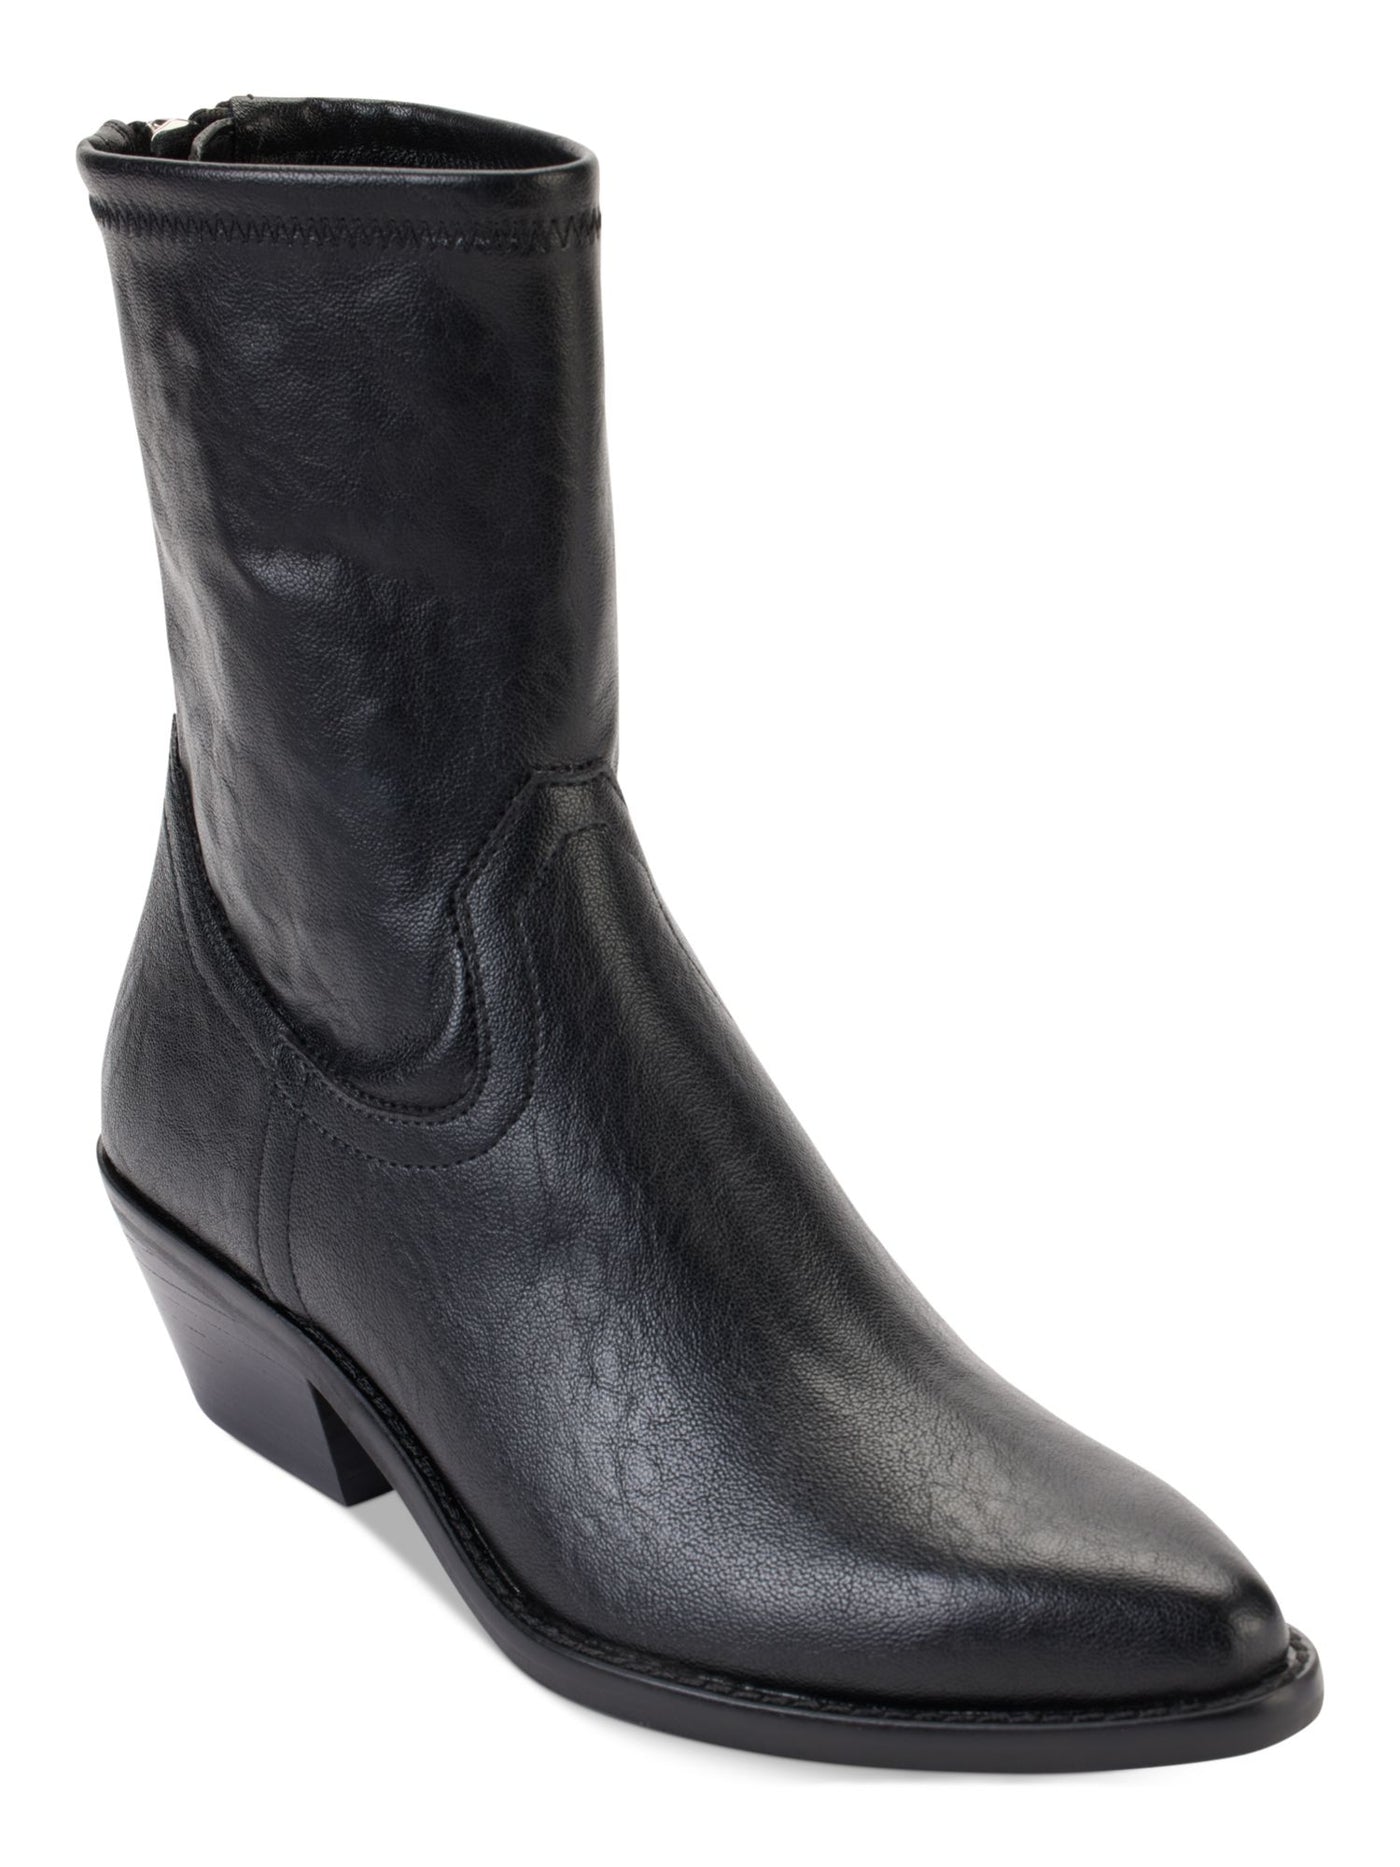 DKNY Womens Black Comfort Raelani Almond Toe Block Heel Zip-Up Boots Shoes 11 M